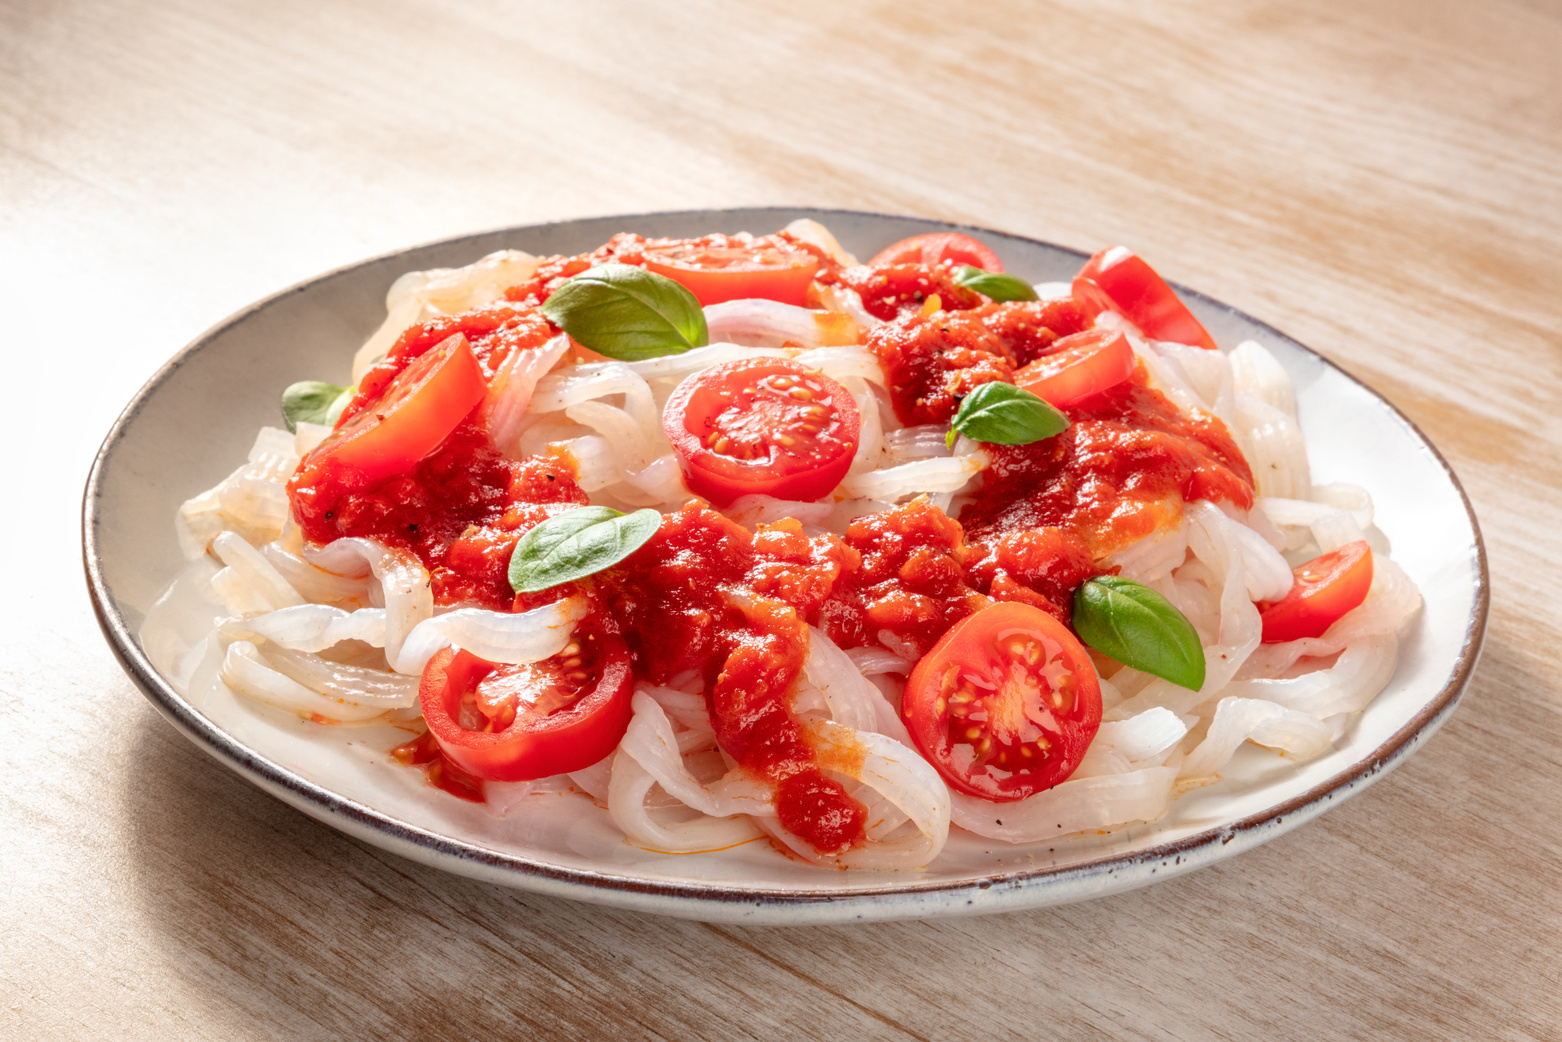 Konjac pasta with tomato sauce